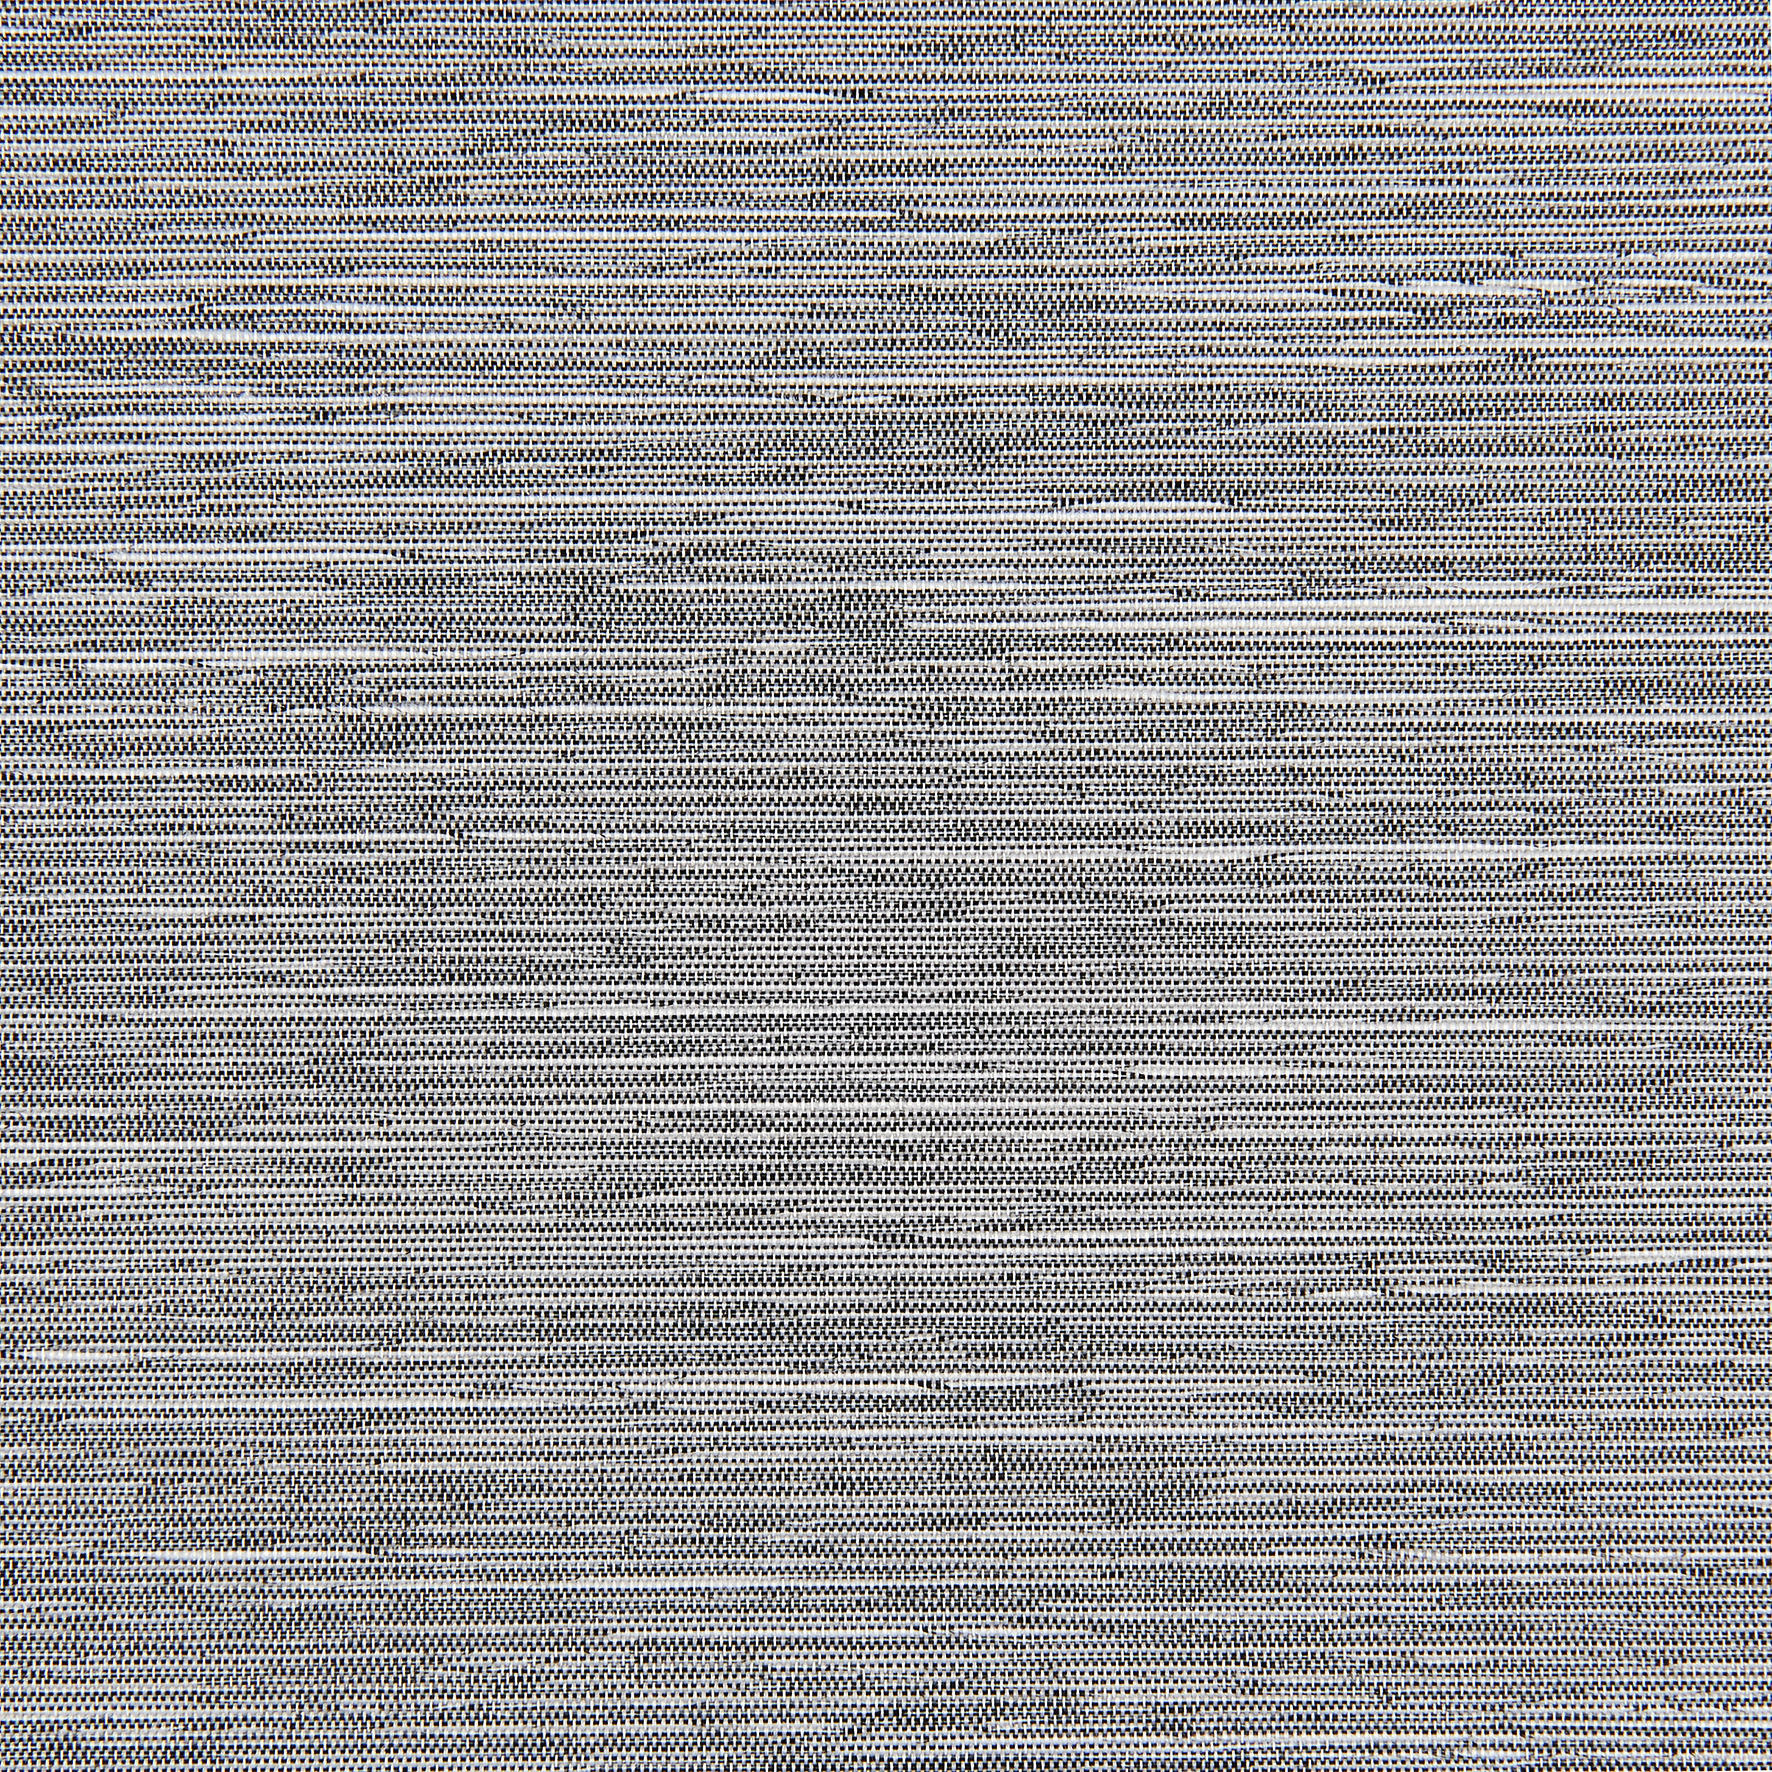 Schiebevorhang Grau B/l: Ca. 60x245 Cm Schiebevorhang_essential - grau (60,00/245,00cm)